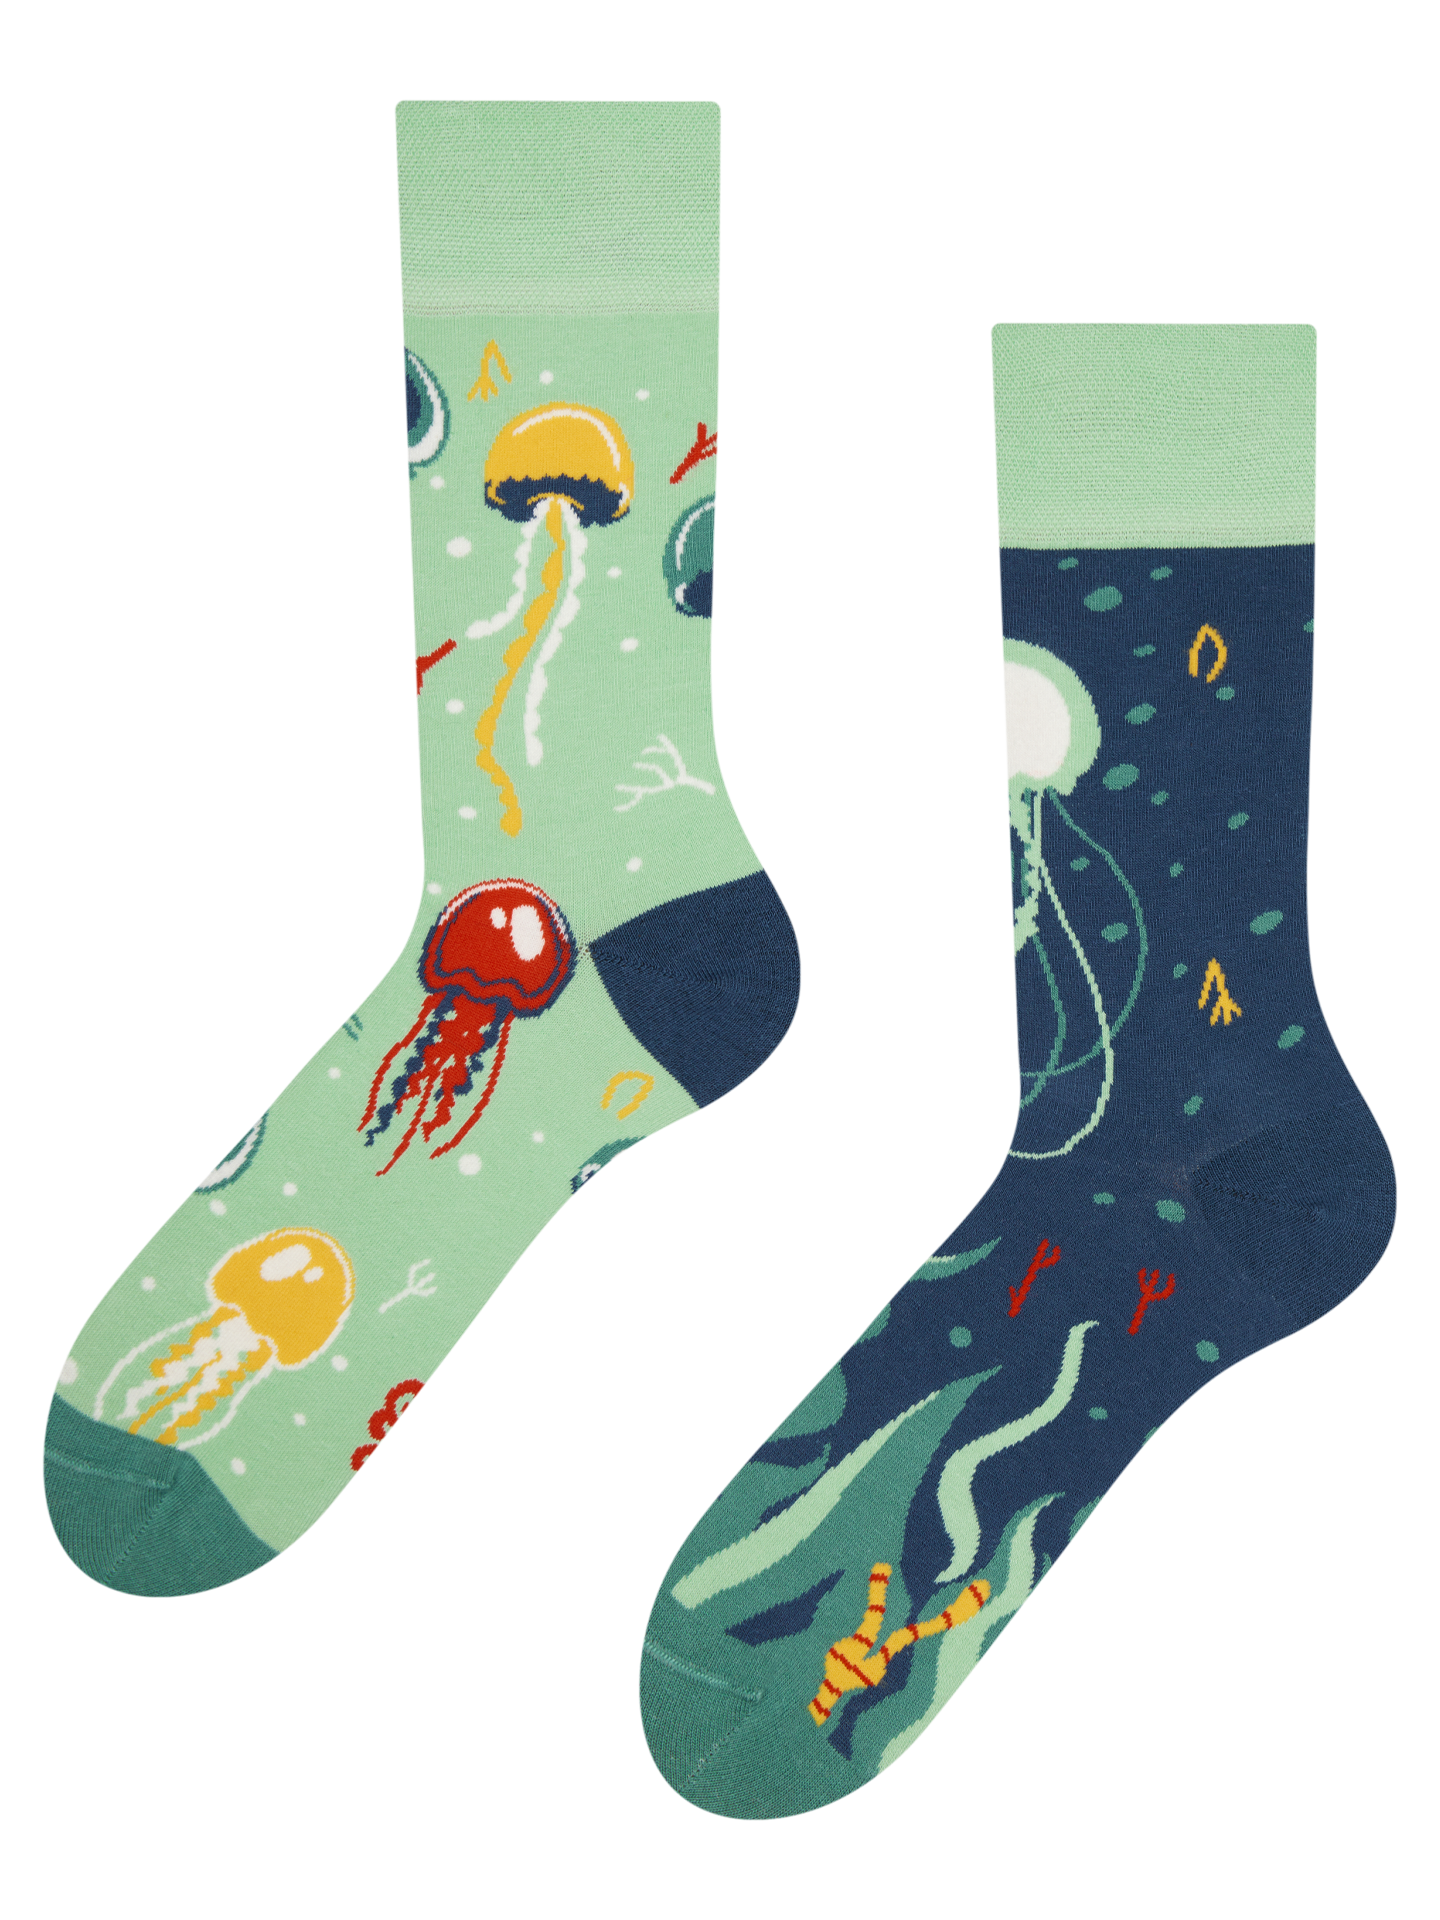 Regular Socks Floating Jellyfish